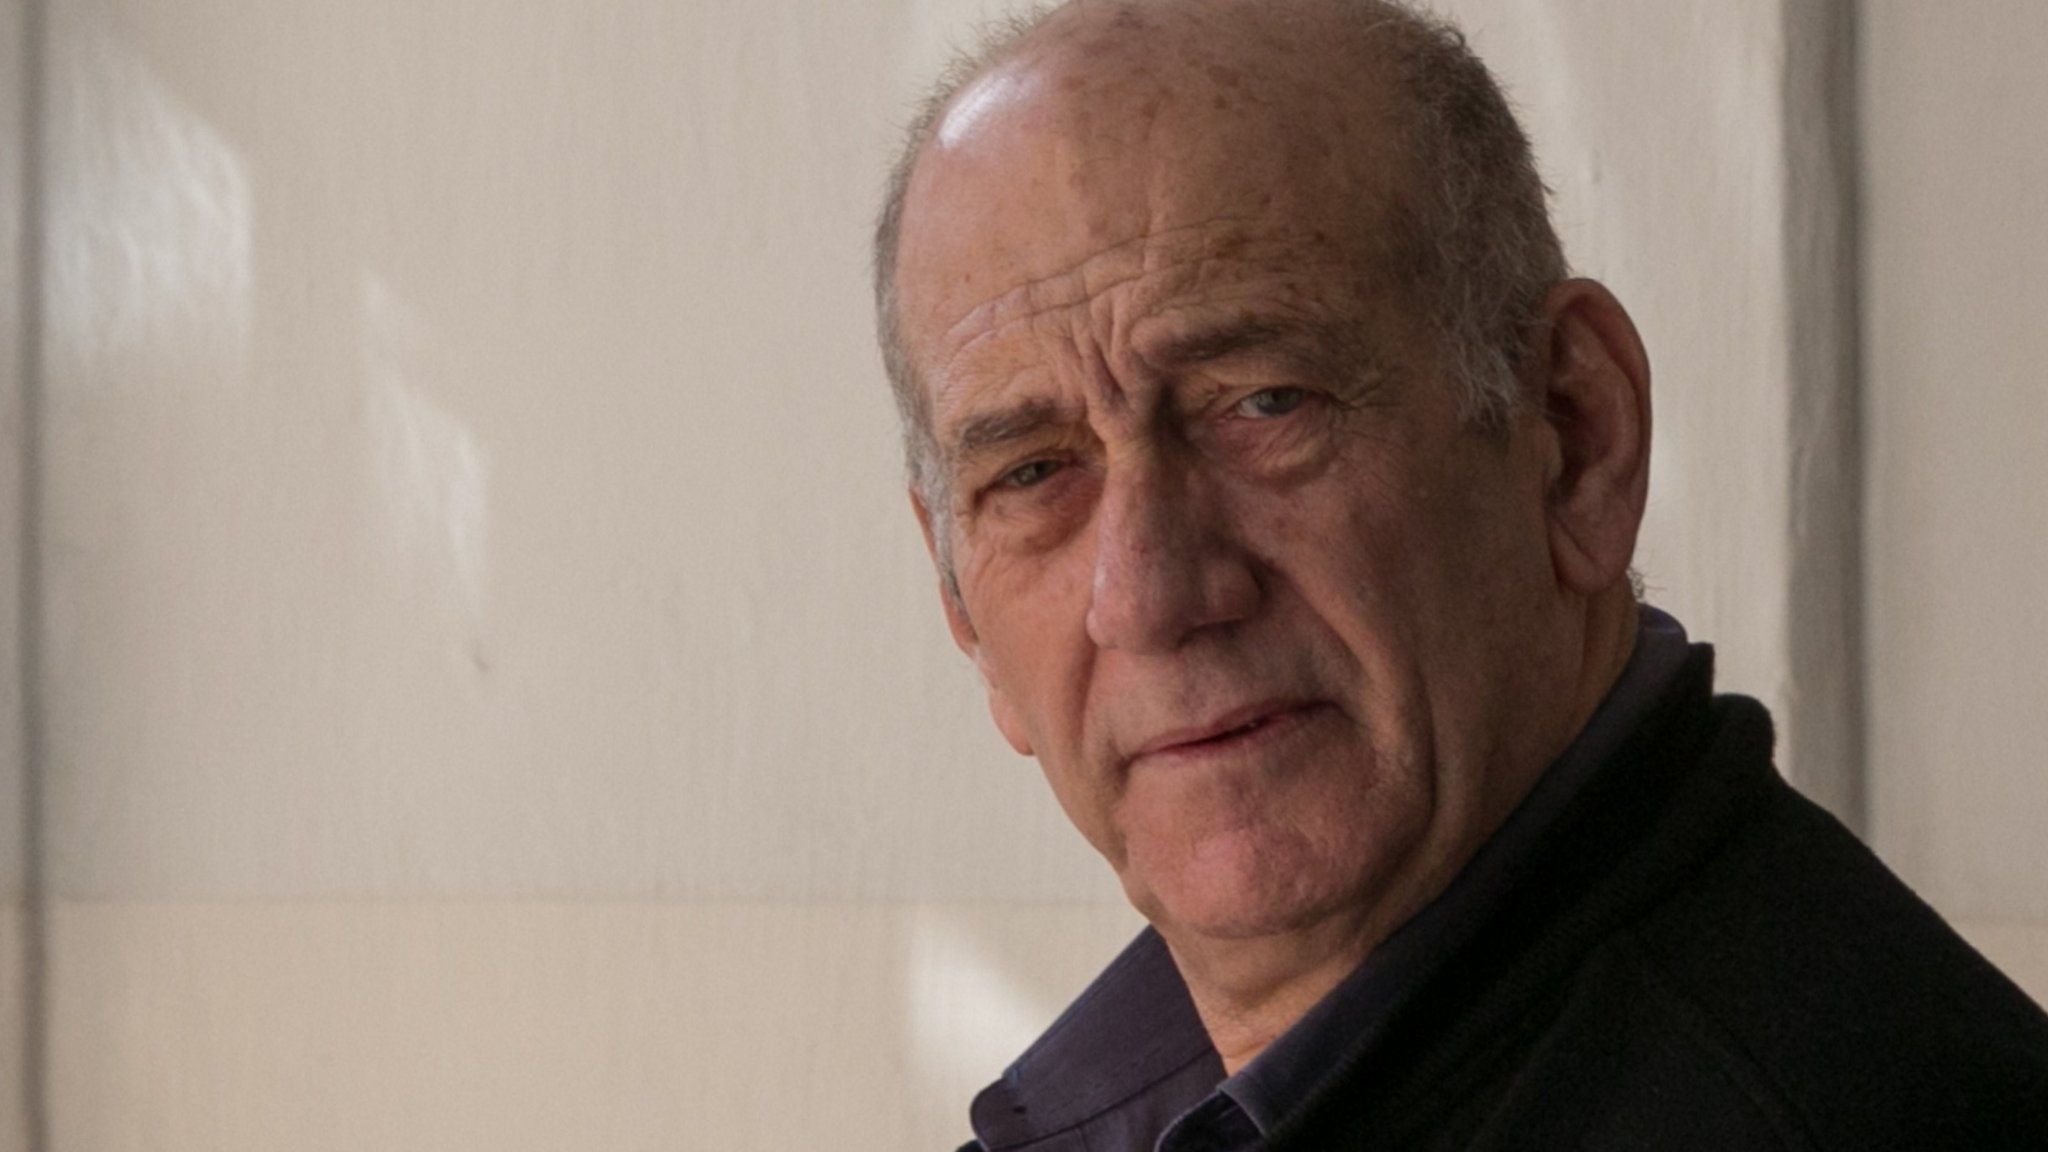 Ehud Olmert in court in Jerusalem on 10 February 2016